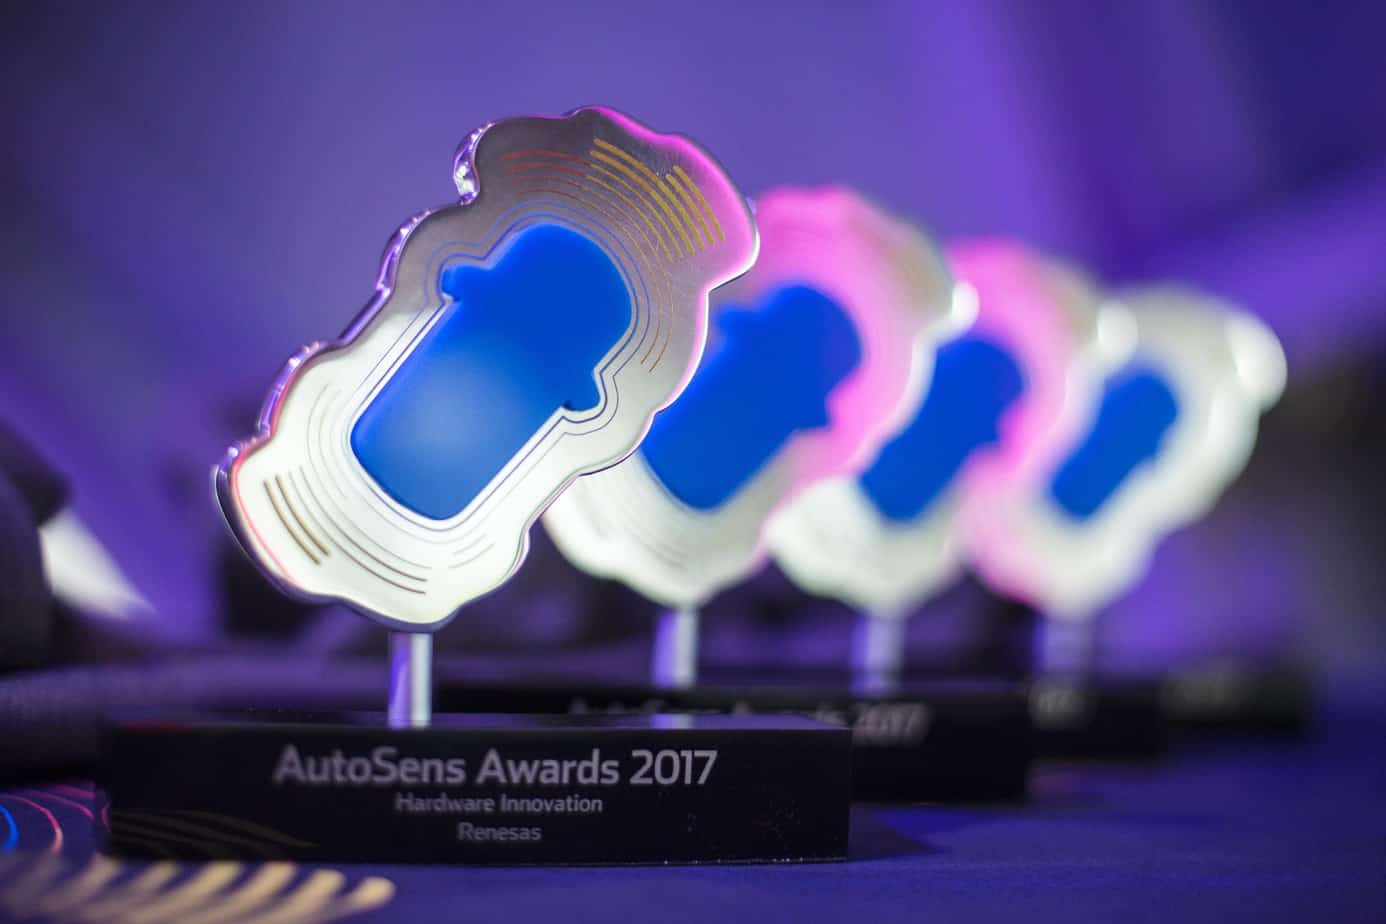 autosens awards